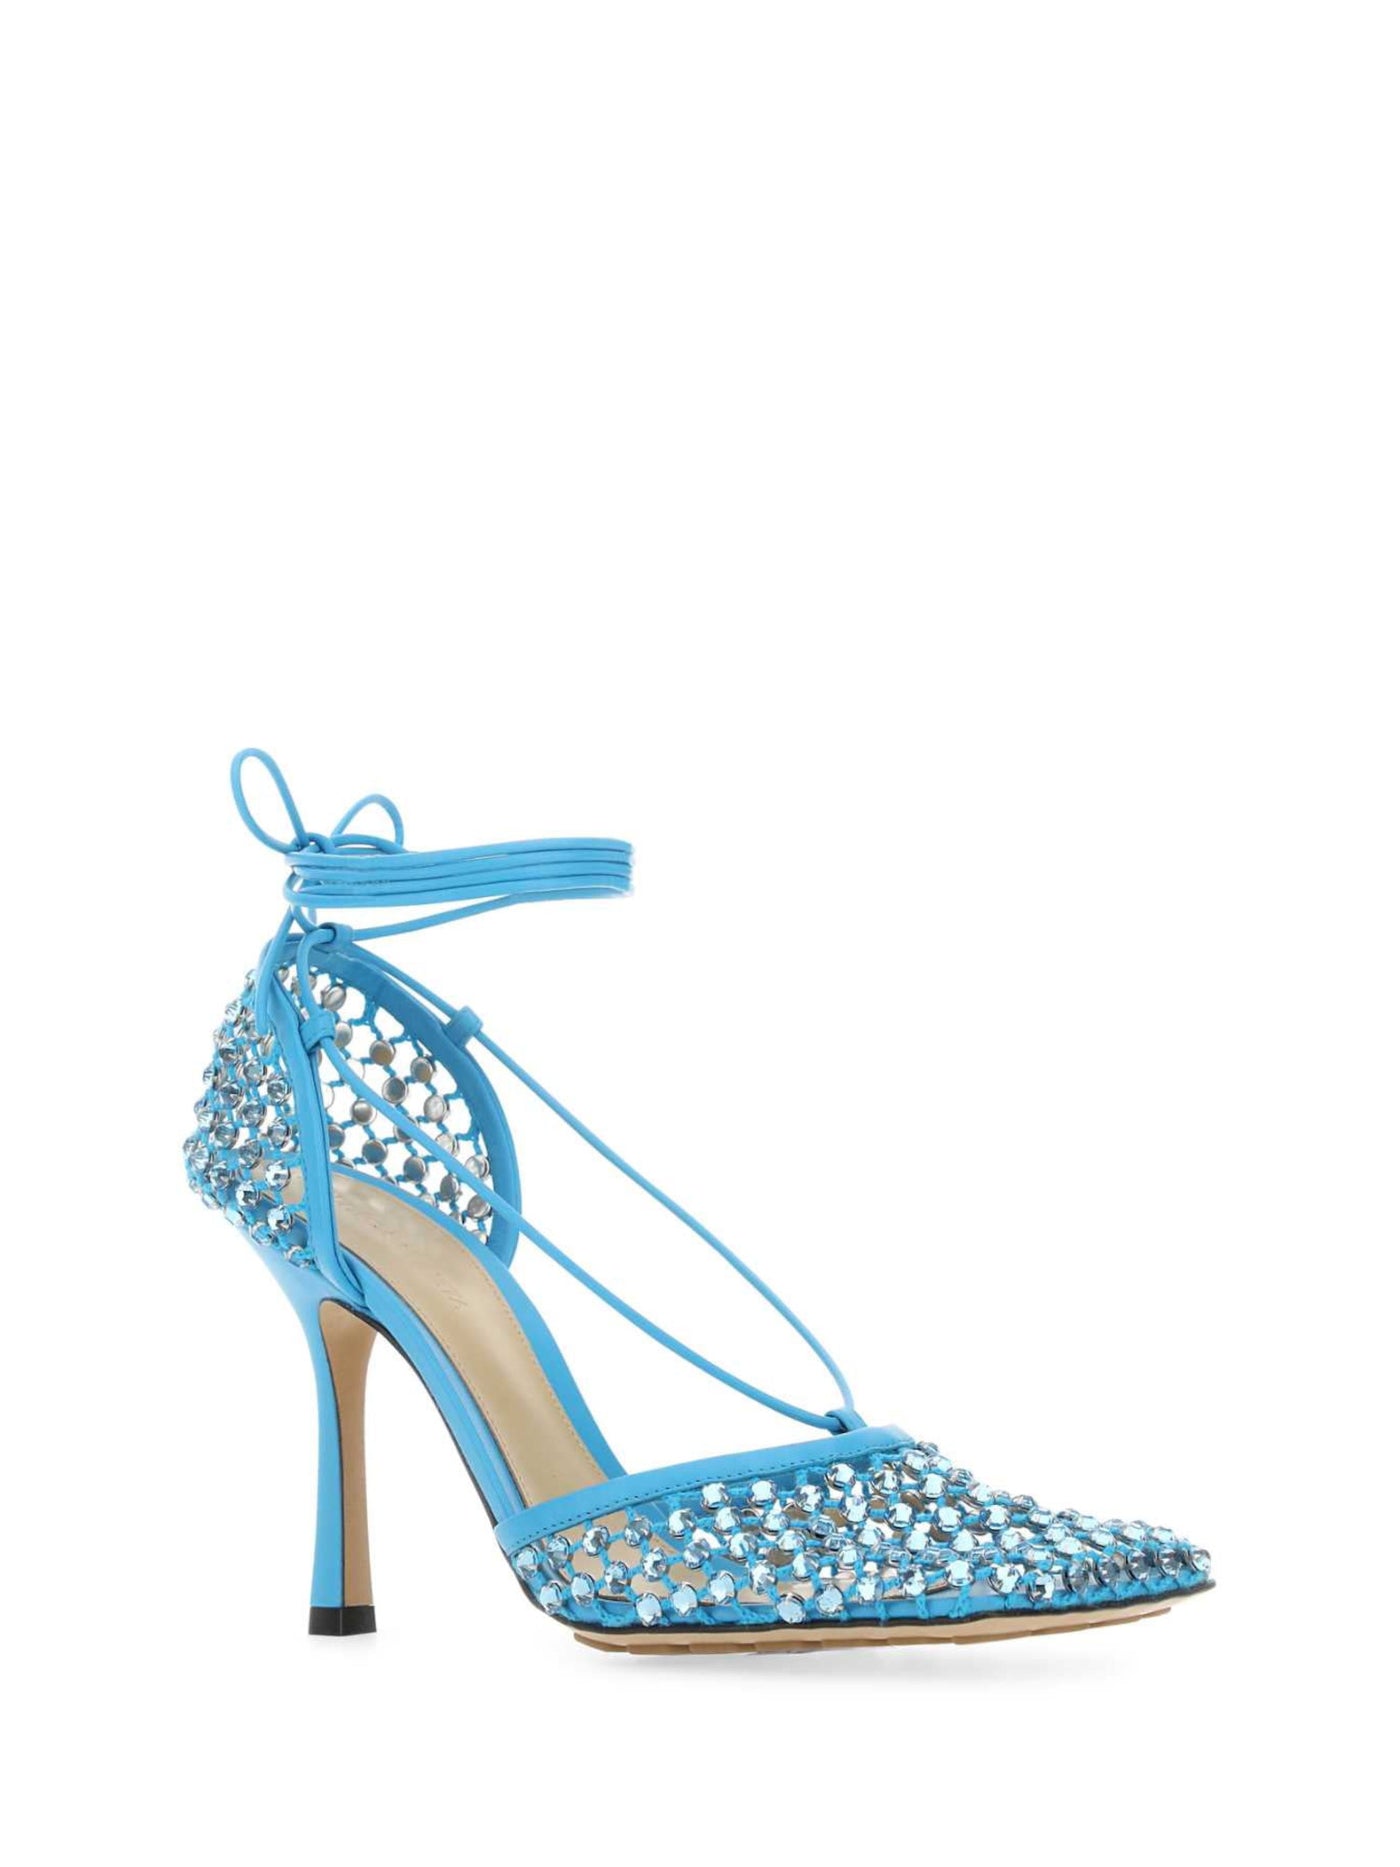 BOTTEGA VENETA Womens Blue Tie Ankle Strap Embellished Square Toe Stiletto Slip On Leather Dress Pumps Shoes 39